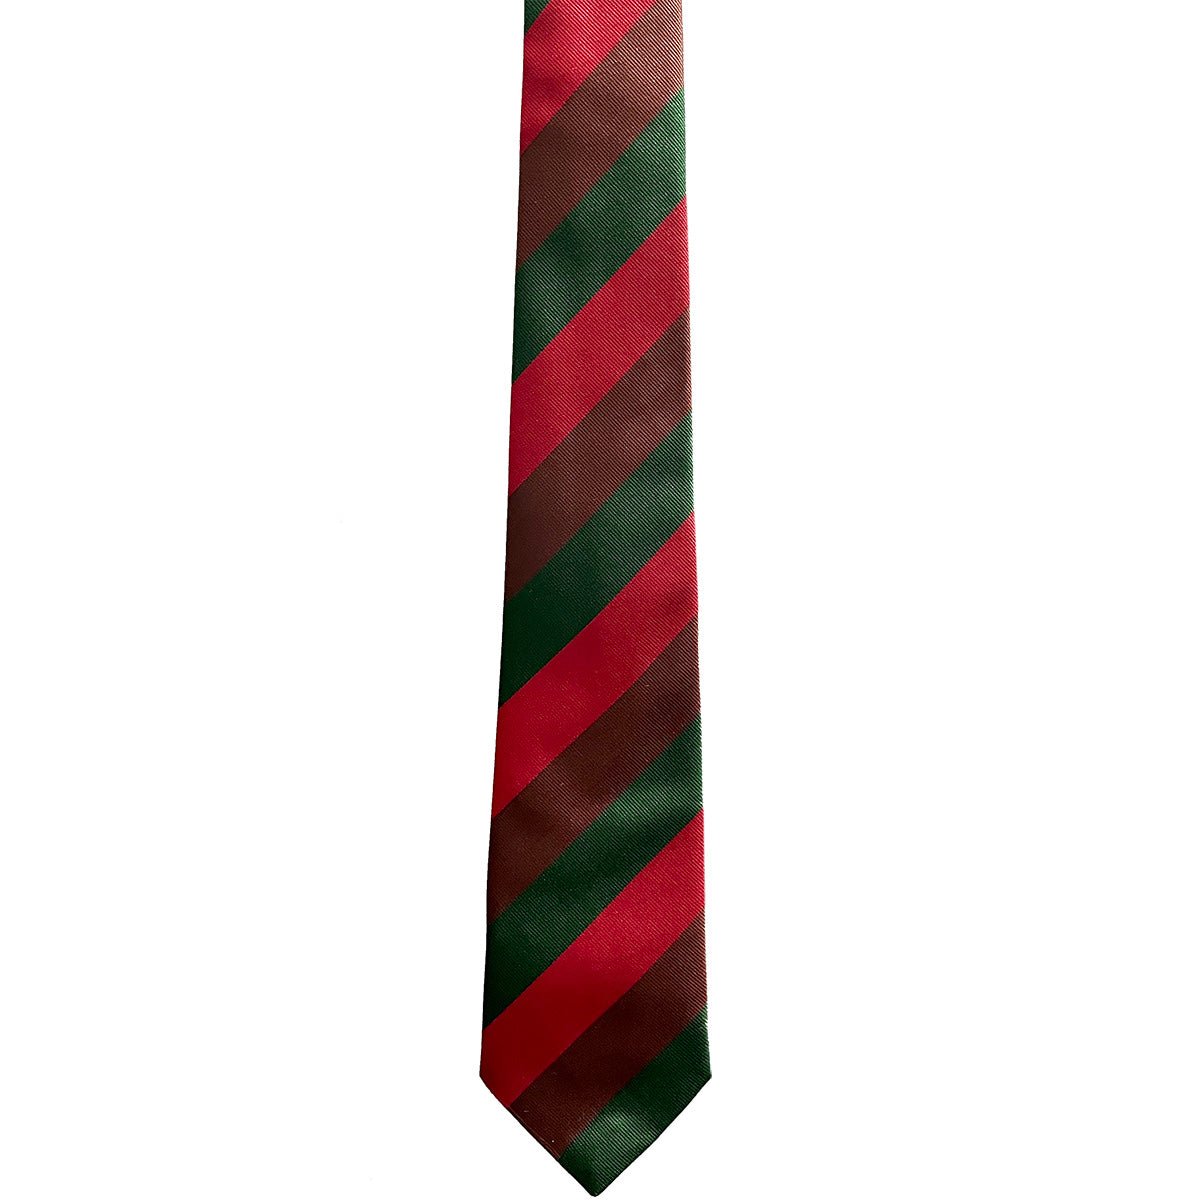 Royal Tank Regiment Regimental Polyester Tie - John Bull Clothing